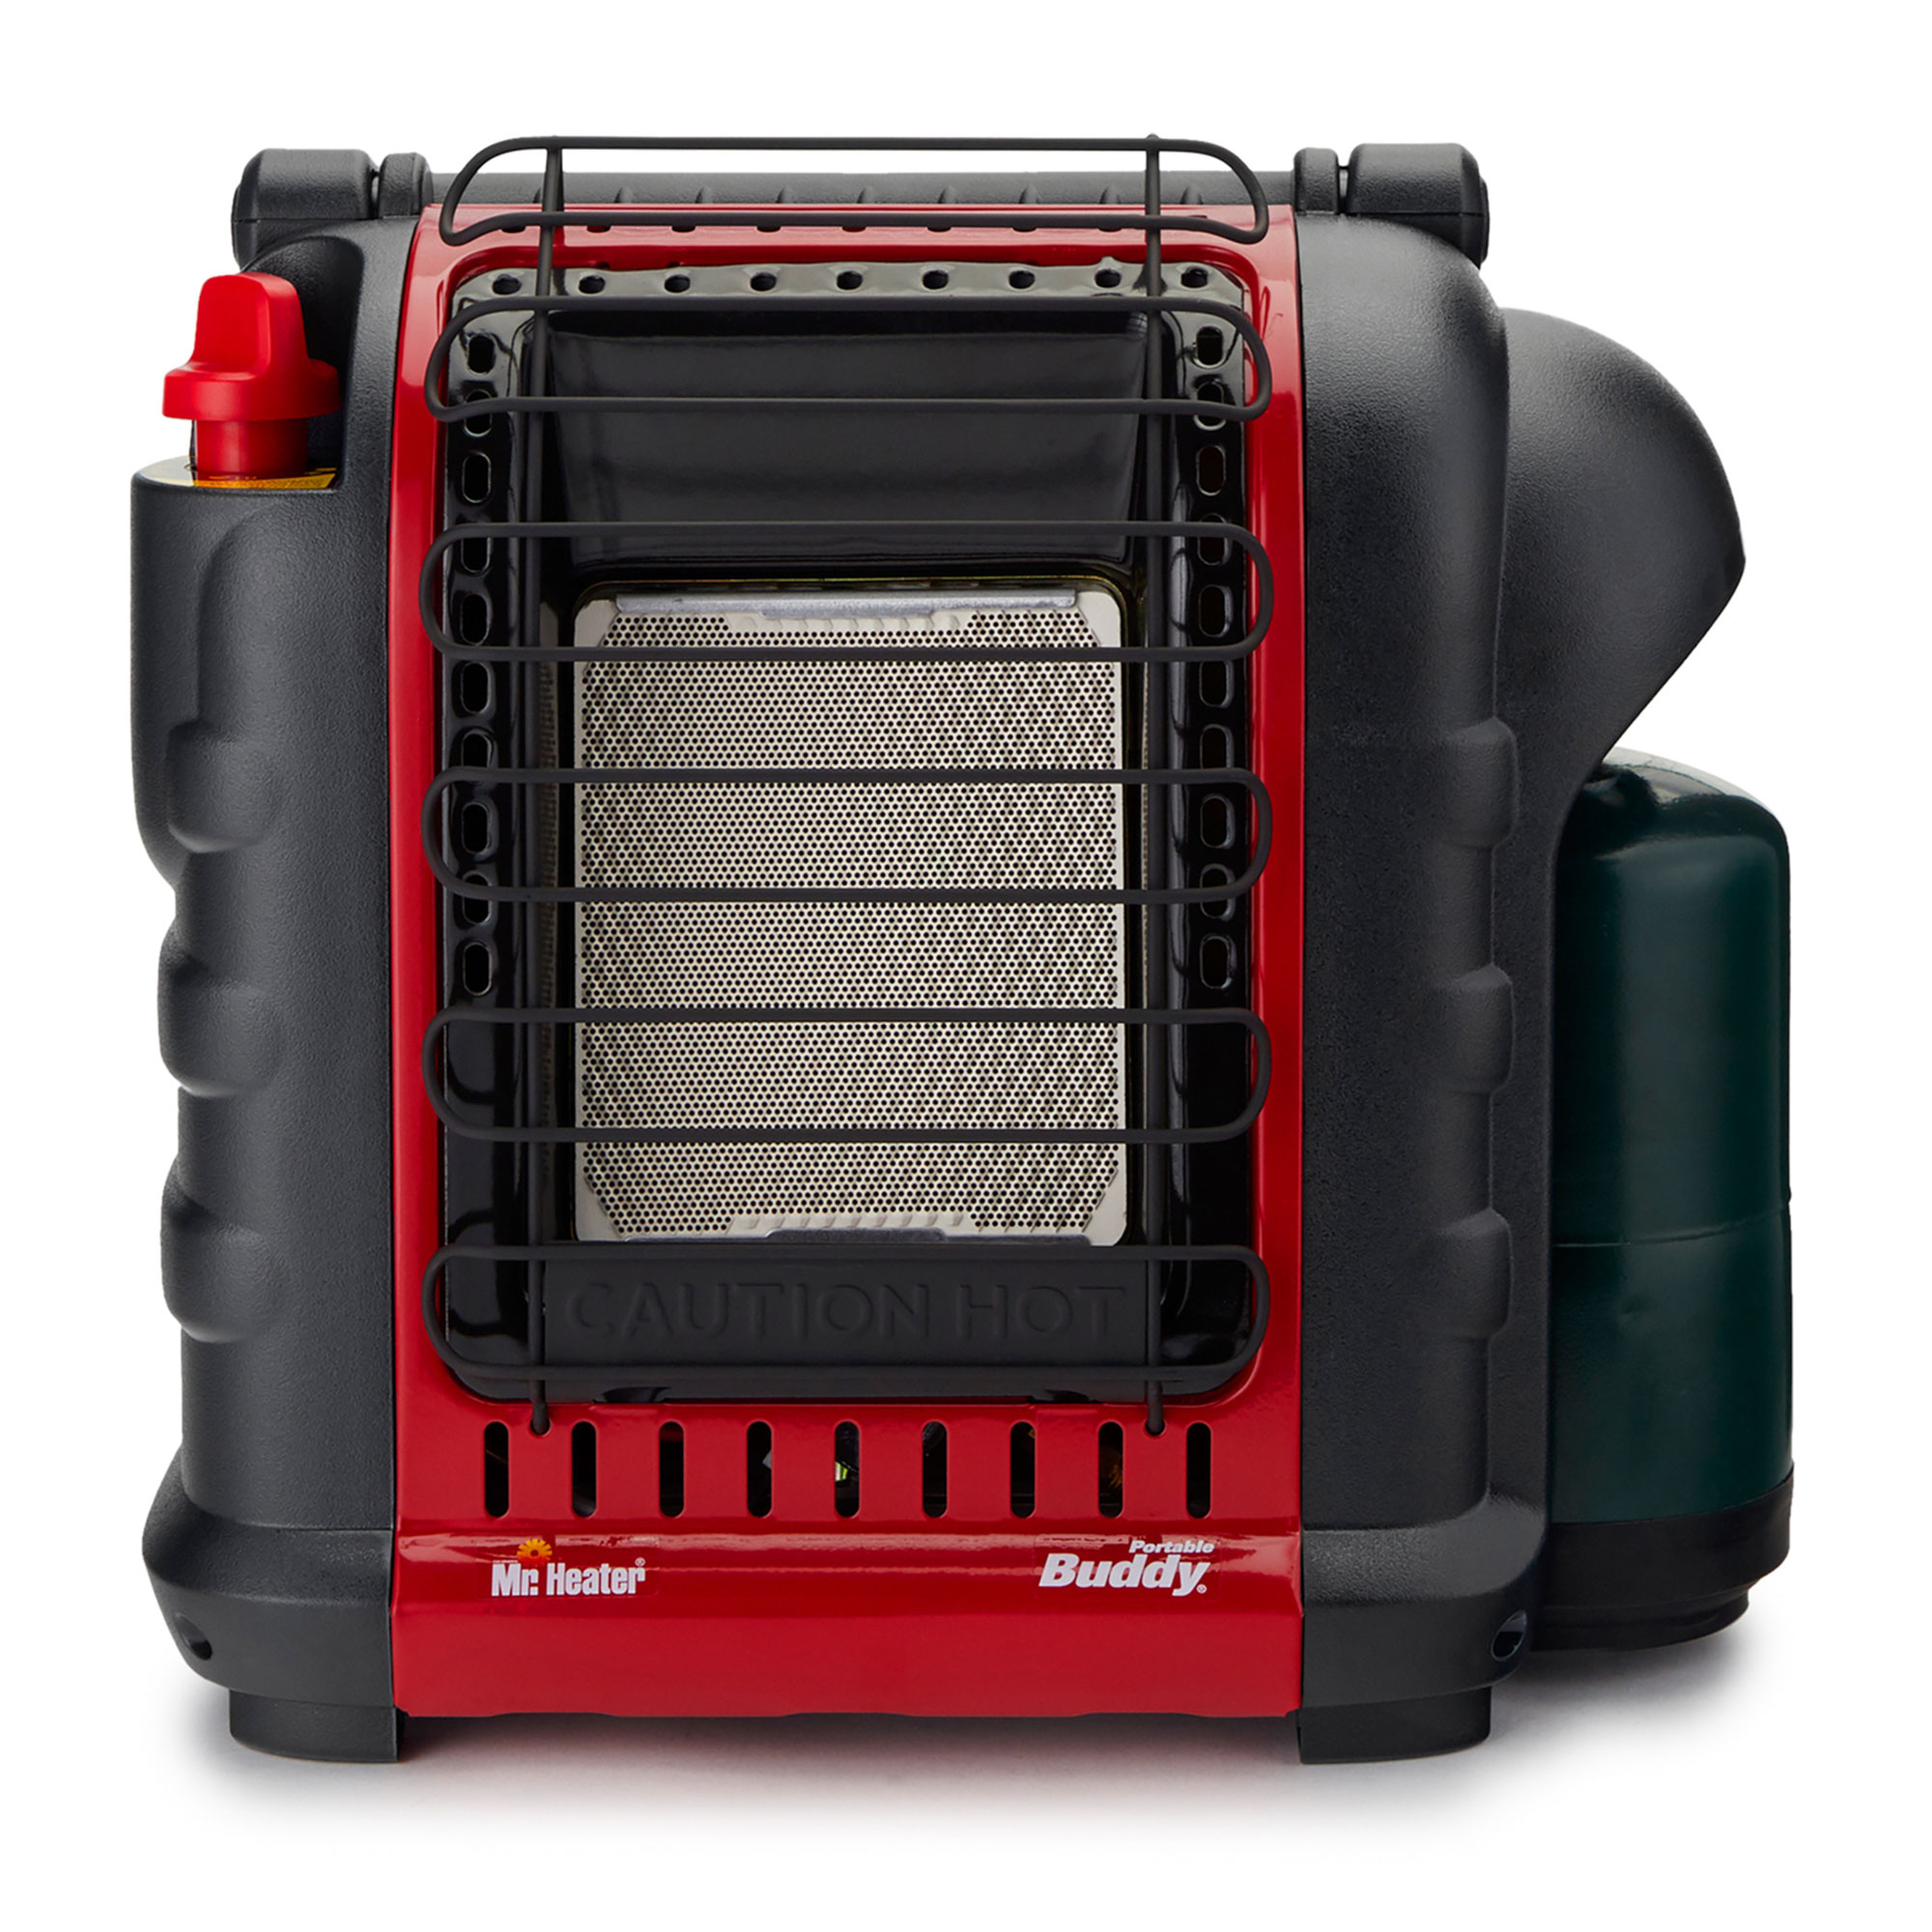 Mr. Heater Brand Portable Buddy 9,000 BTU Outdoor Camping Liquid Propane Heater - image 2 of 9